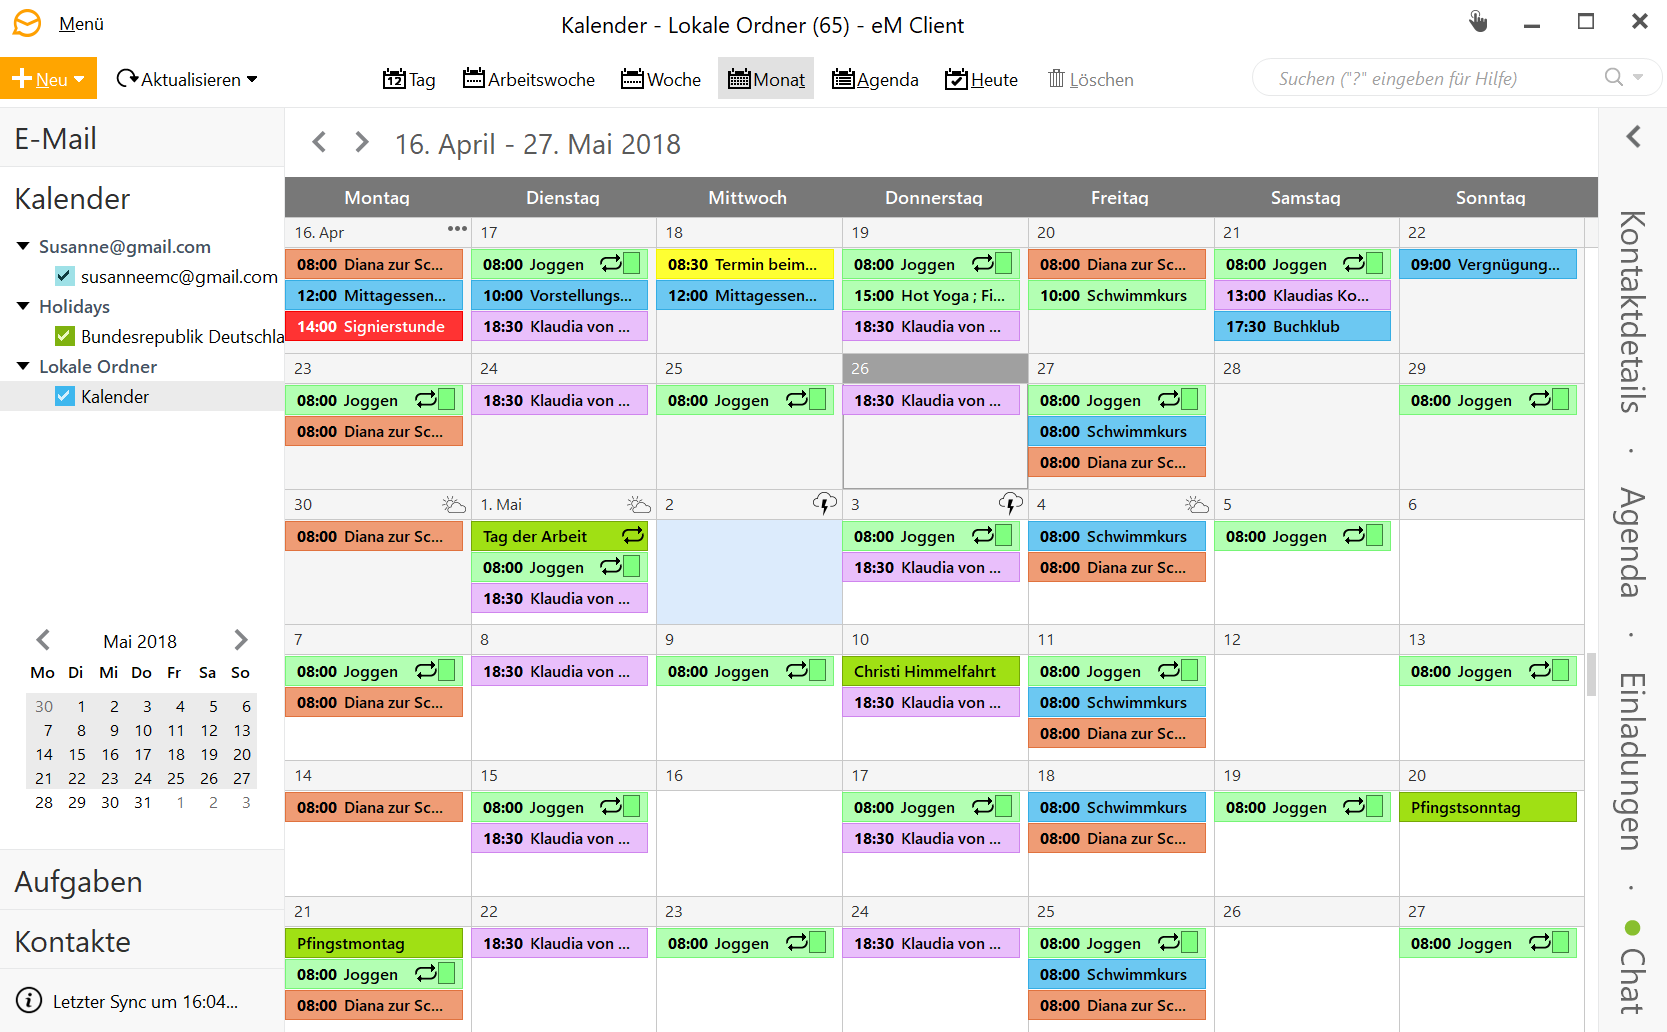 Features Kalender und Aufgaben eM Client eM Client